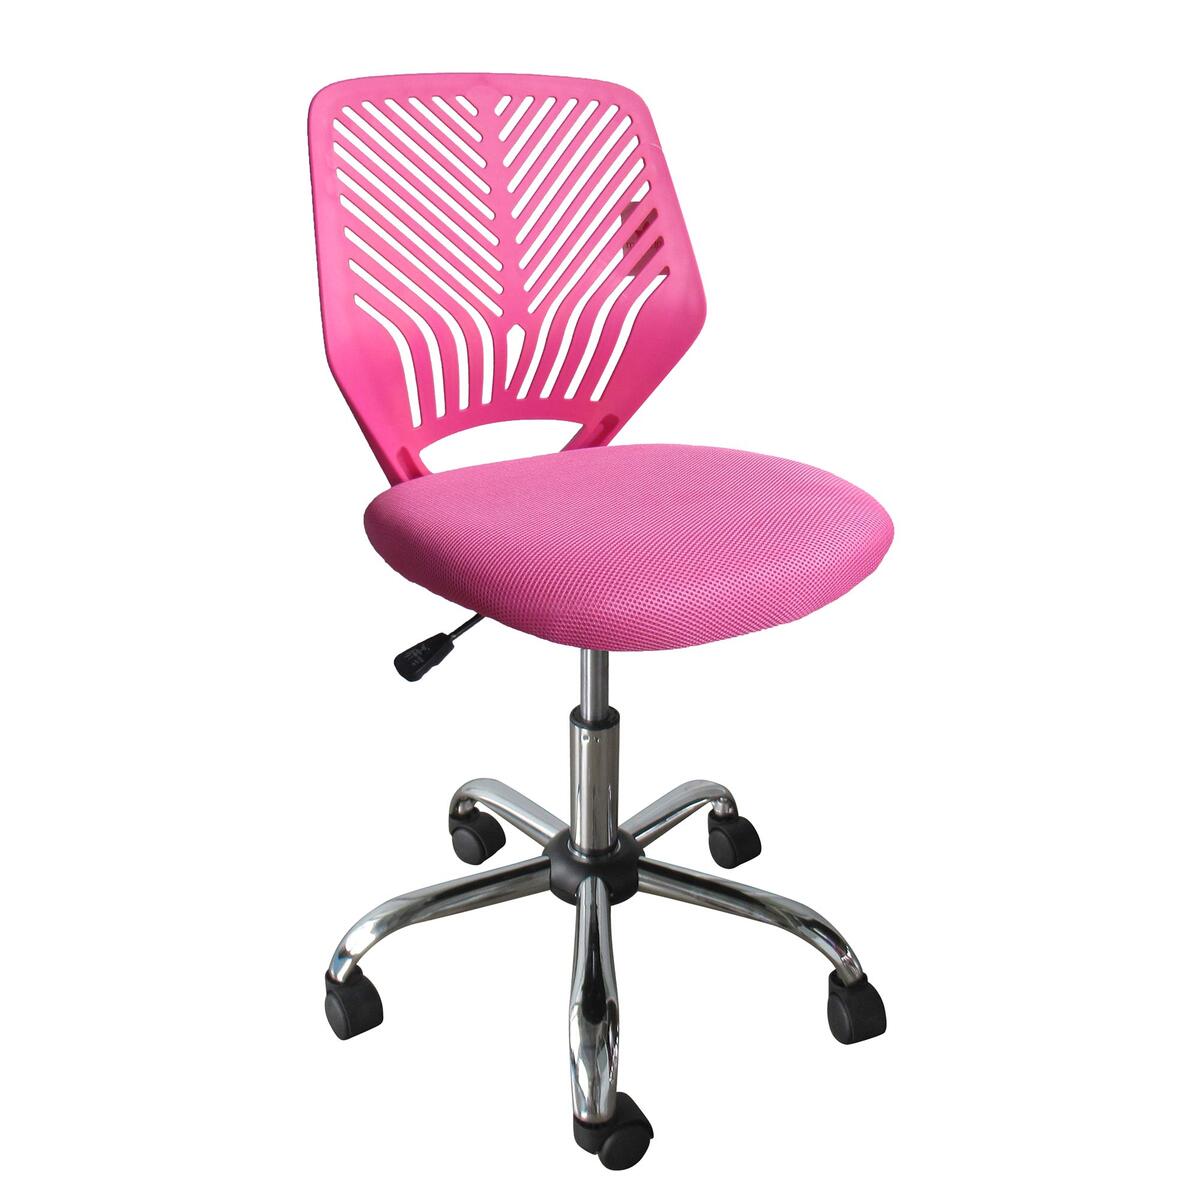 Maple Leaf Task Chair,Pink